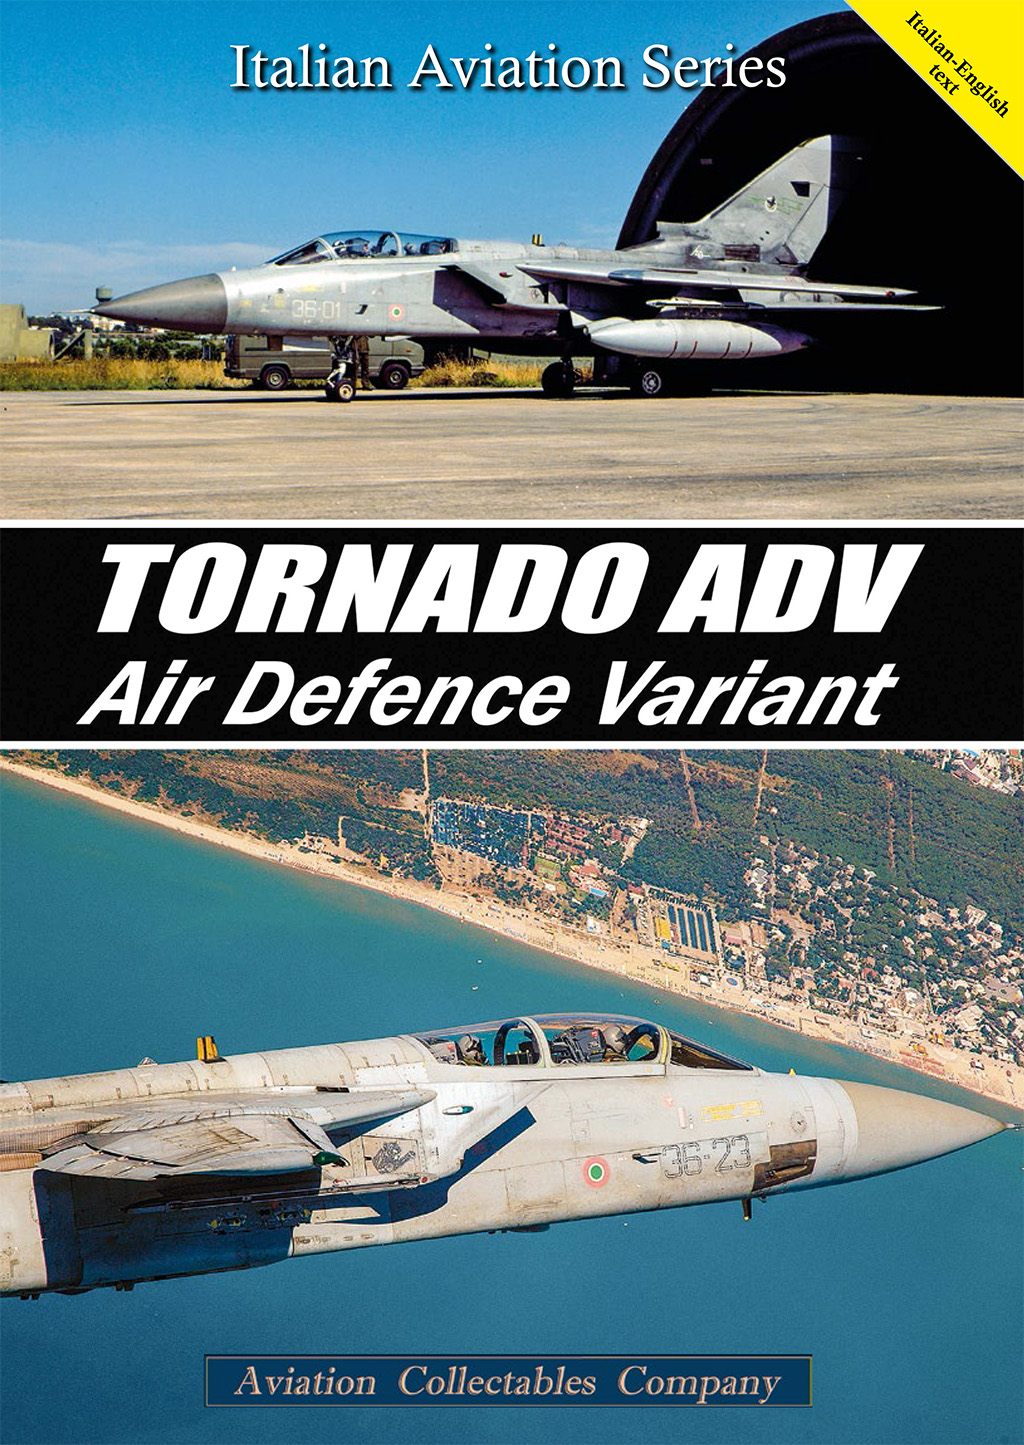 Italian Aviation Series: Tornado ADV – Air Defence Variant